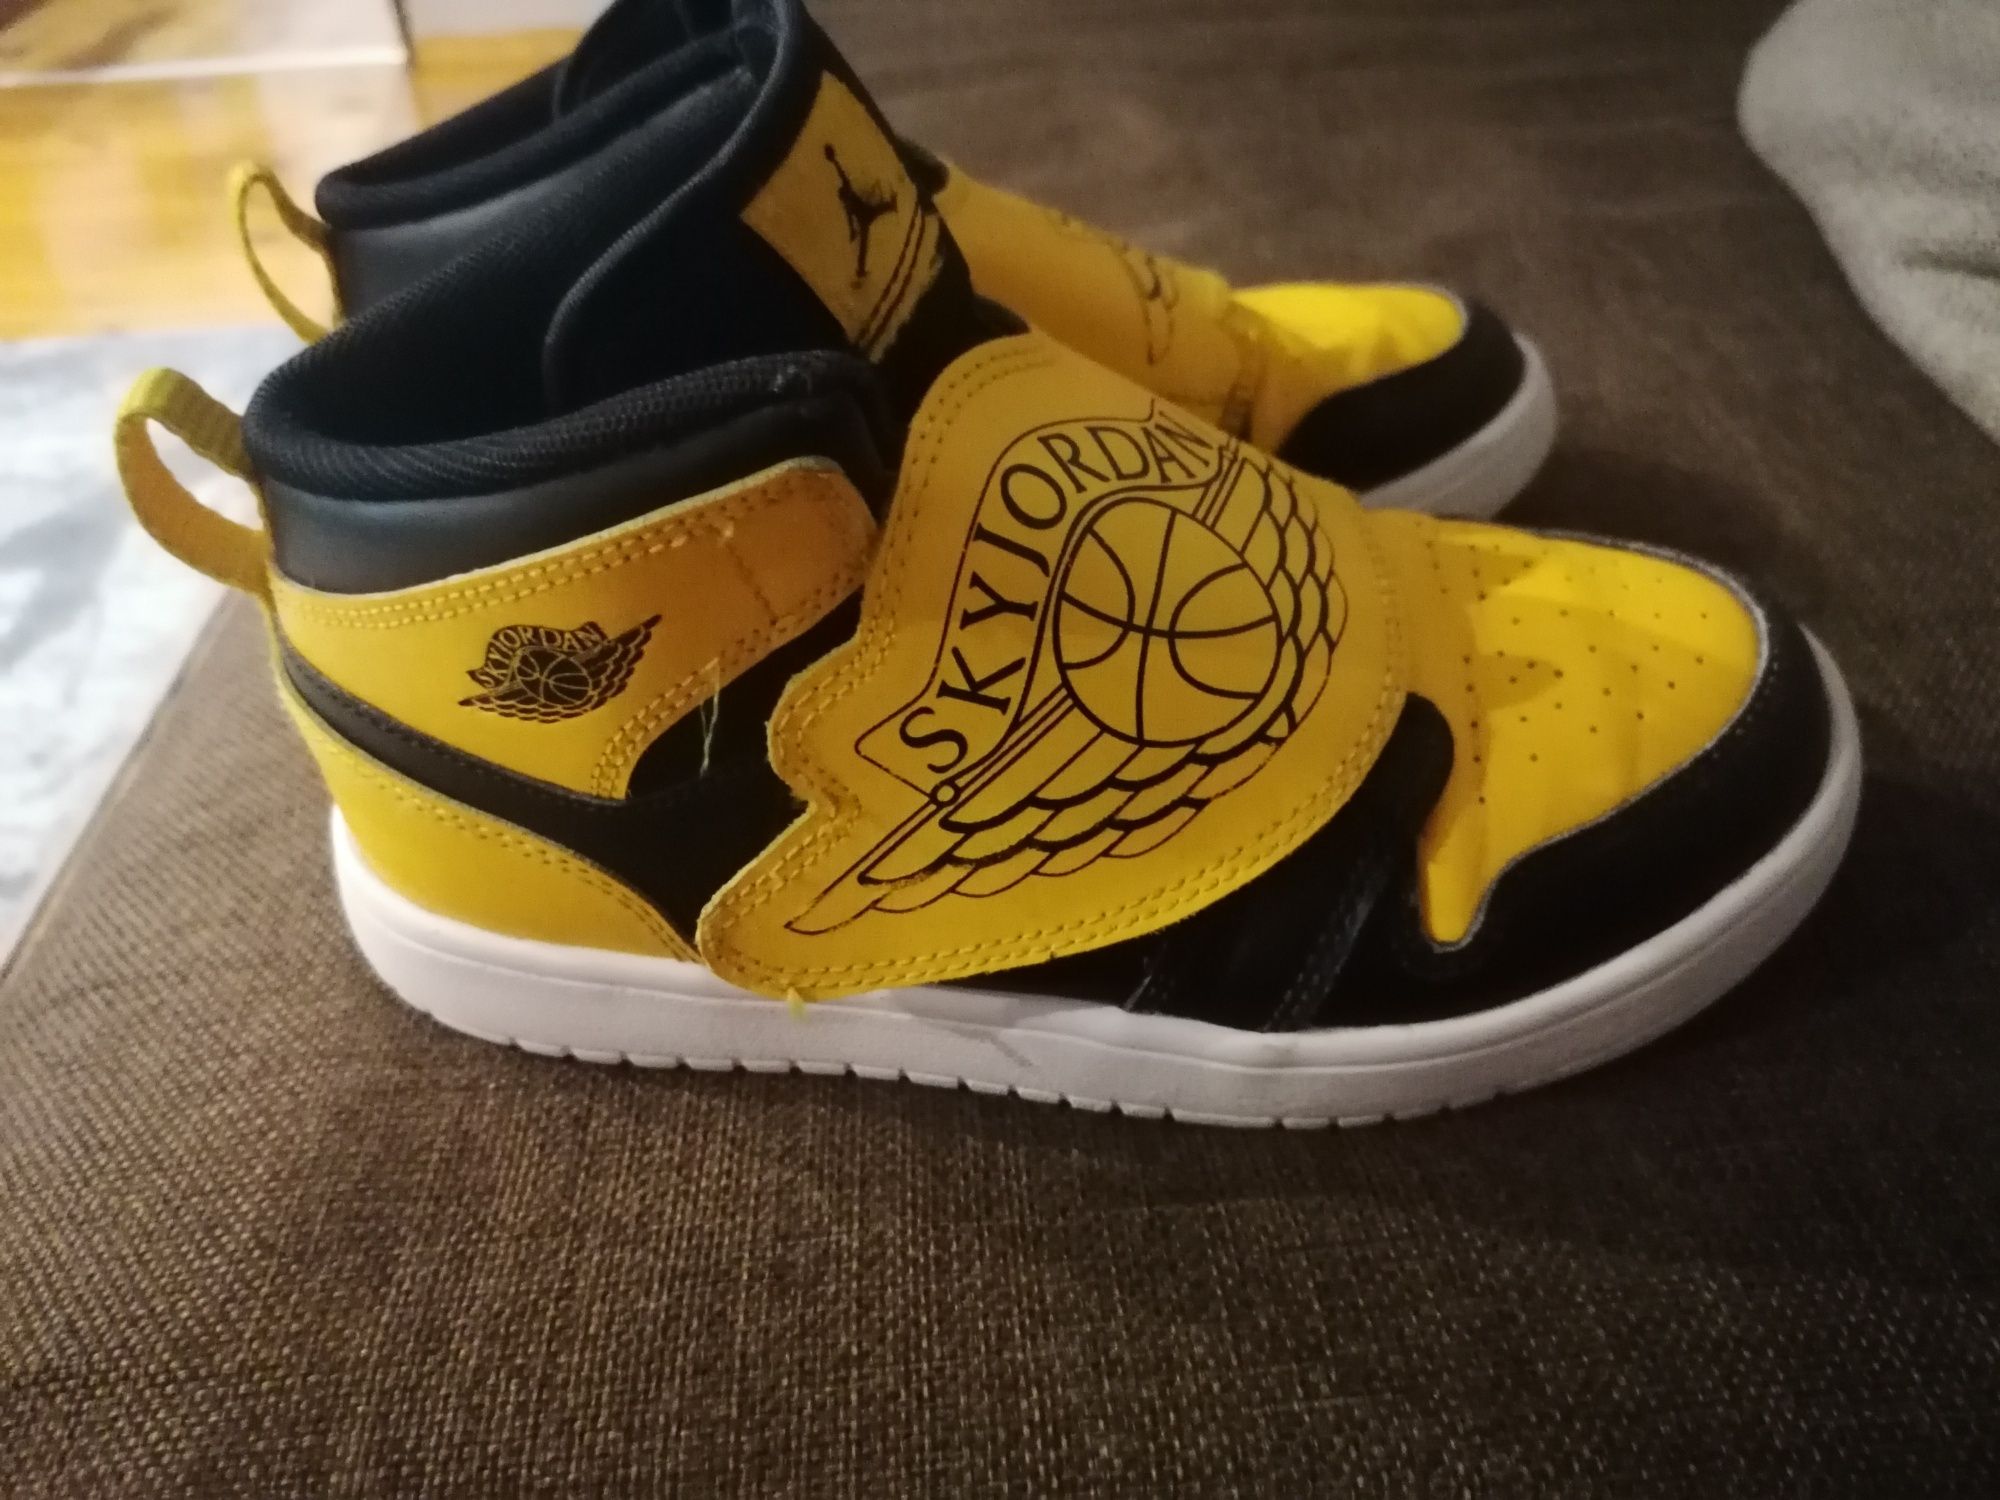 Sneakersy sky jordan żółte.